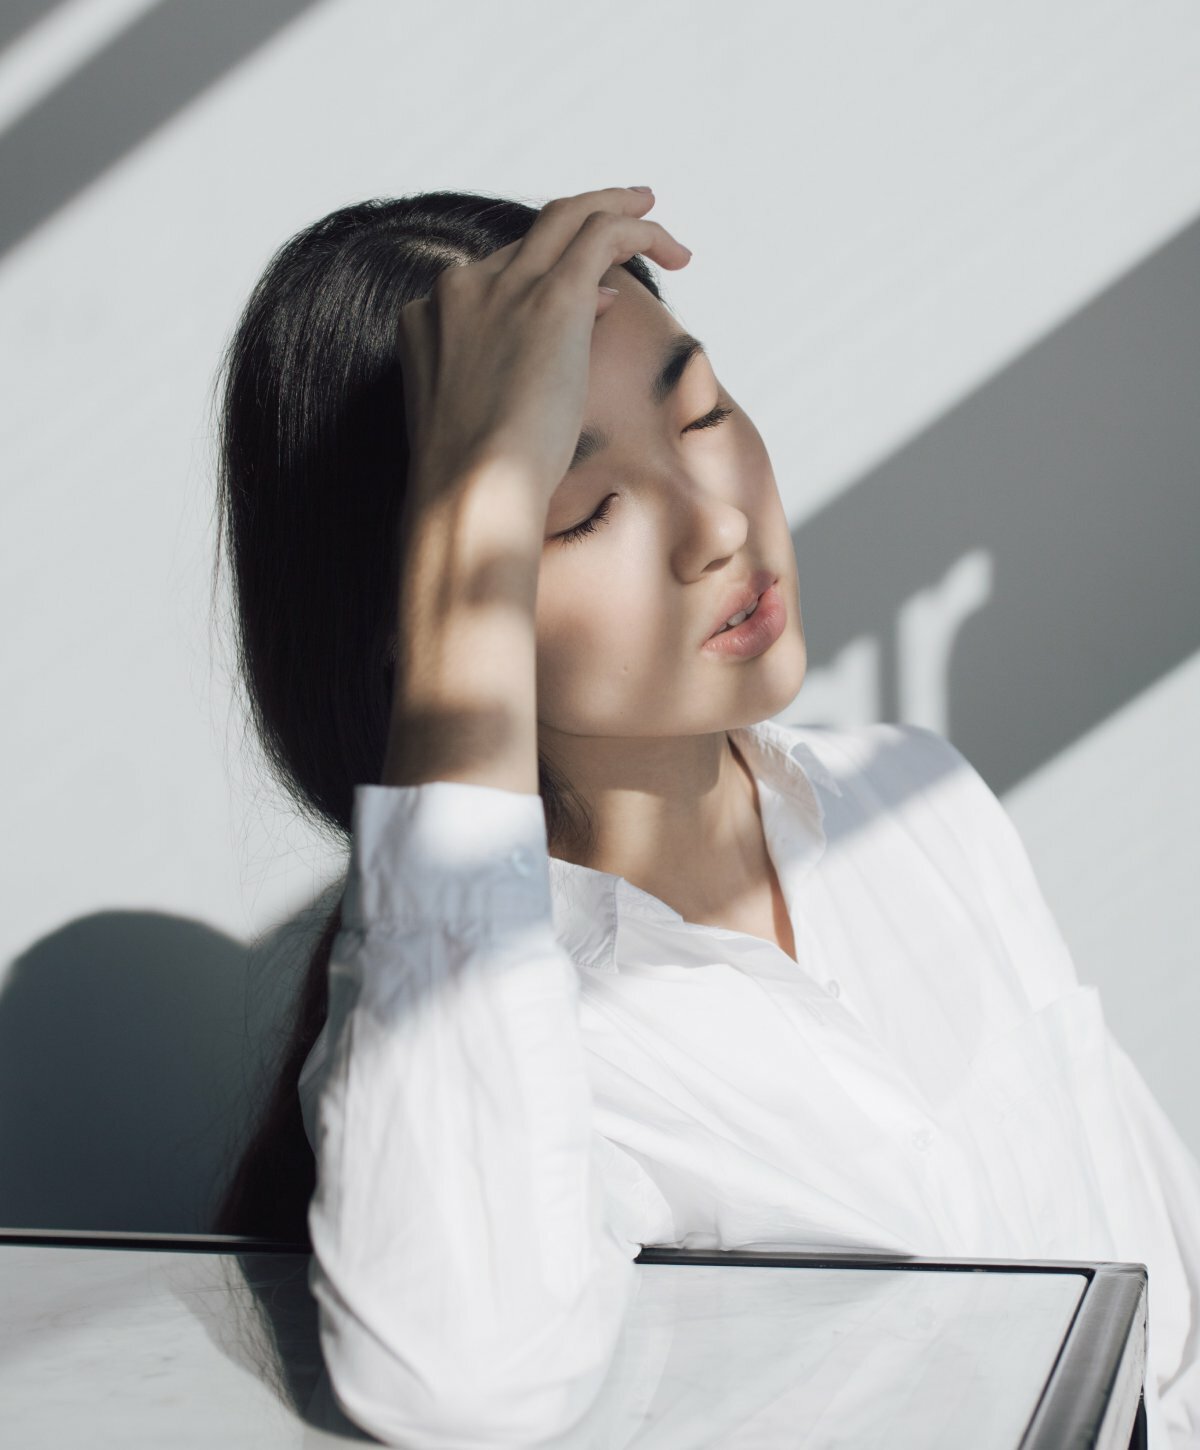 New York Dermal Fillers model wearing a white blouse